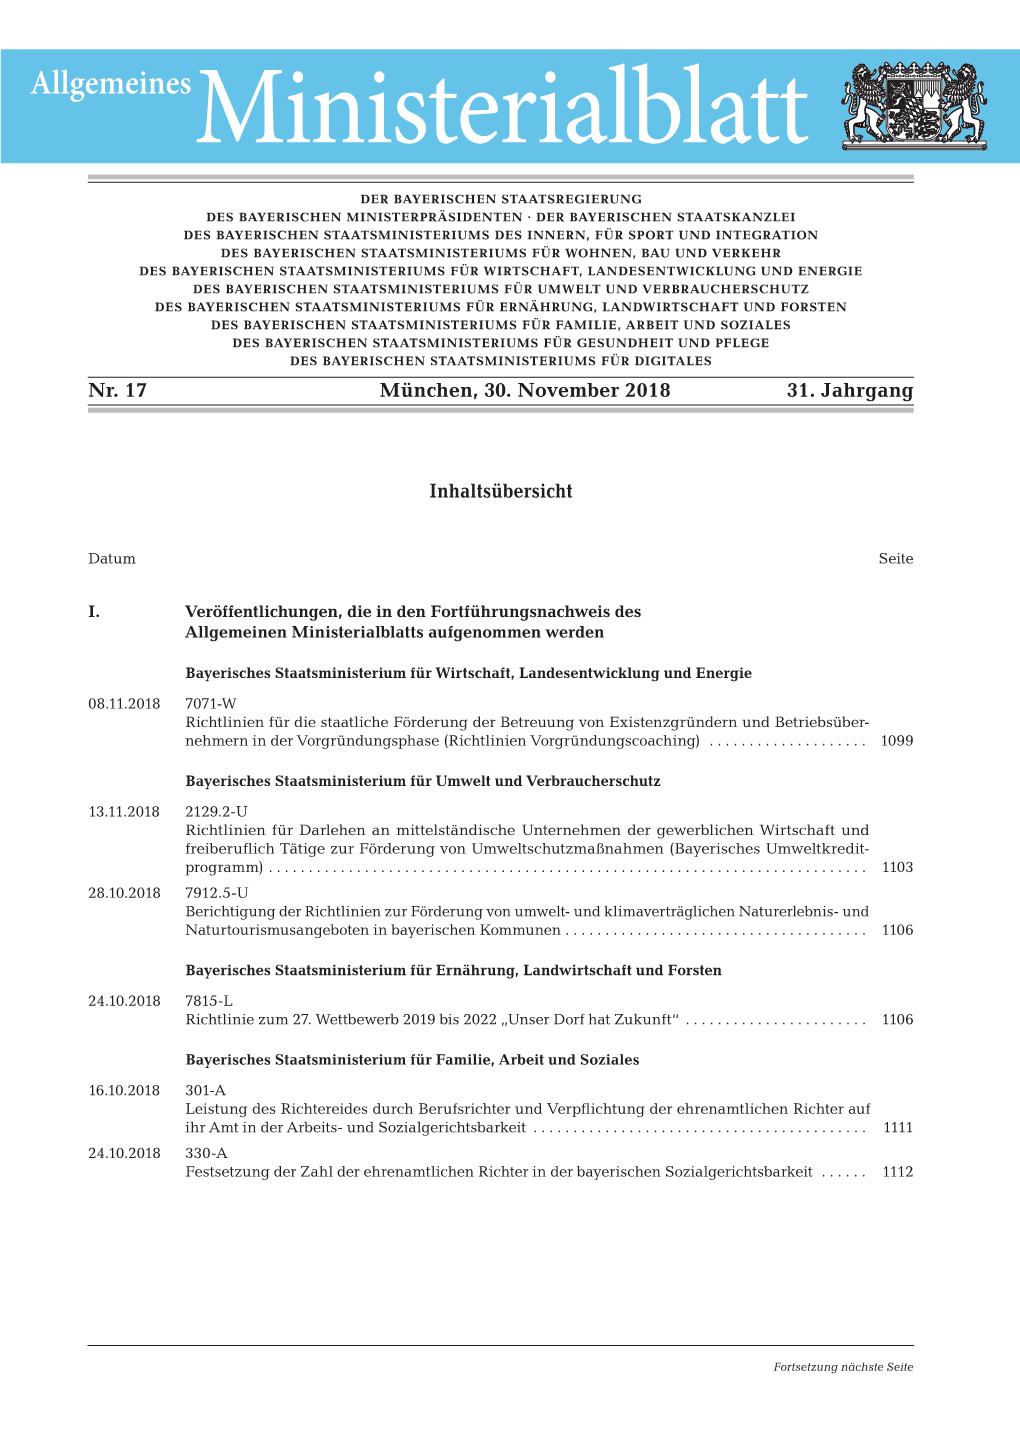 Allgemeines Ministerialblatt, 2018-17